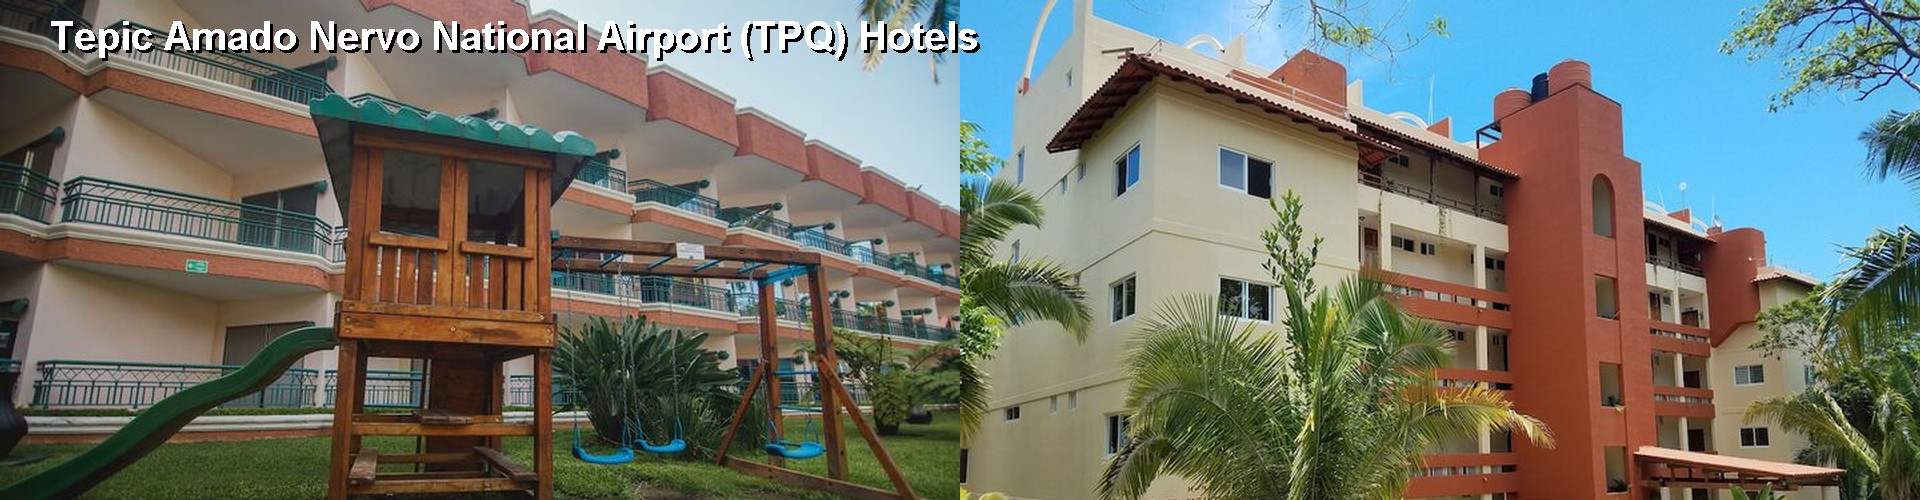 5 Best Hotels near Tepic Amado Nervo National Airport (TPQ)